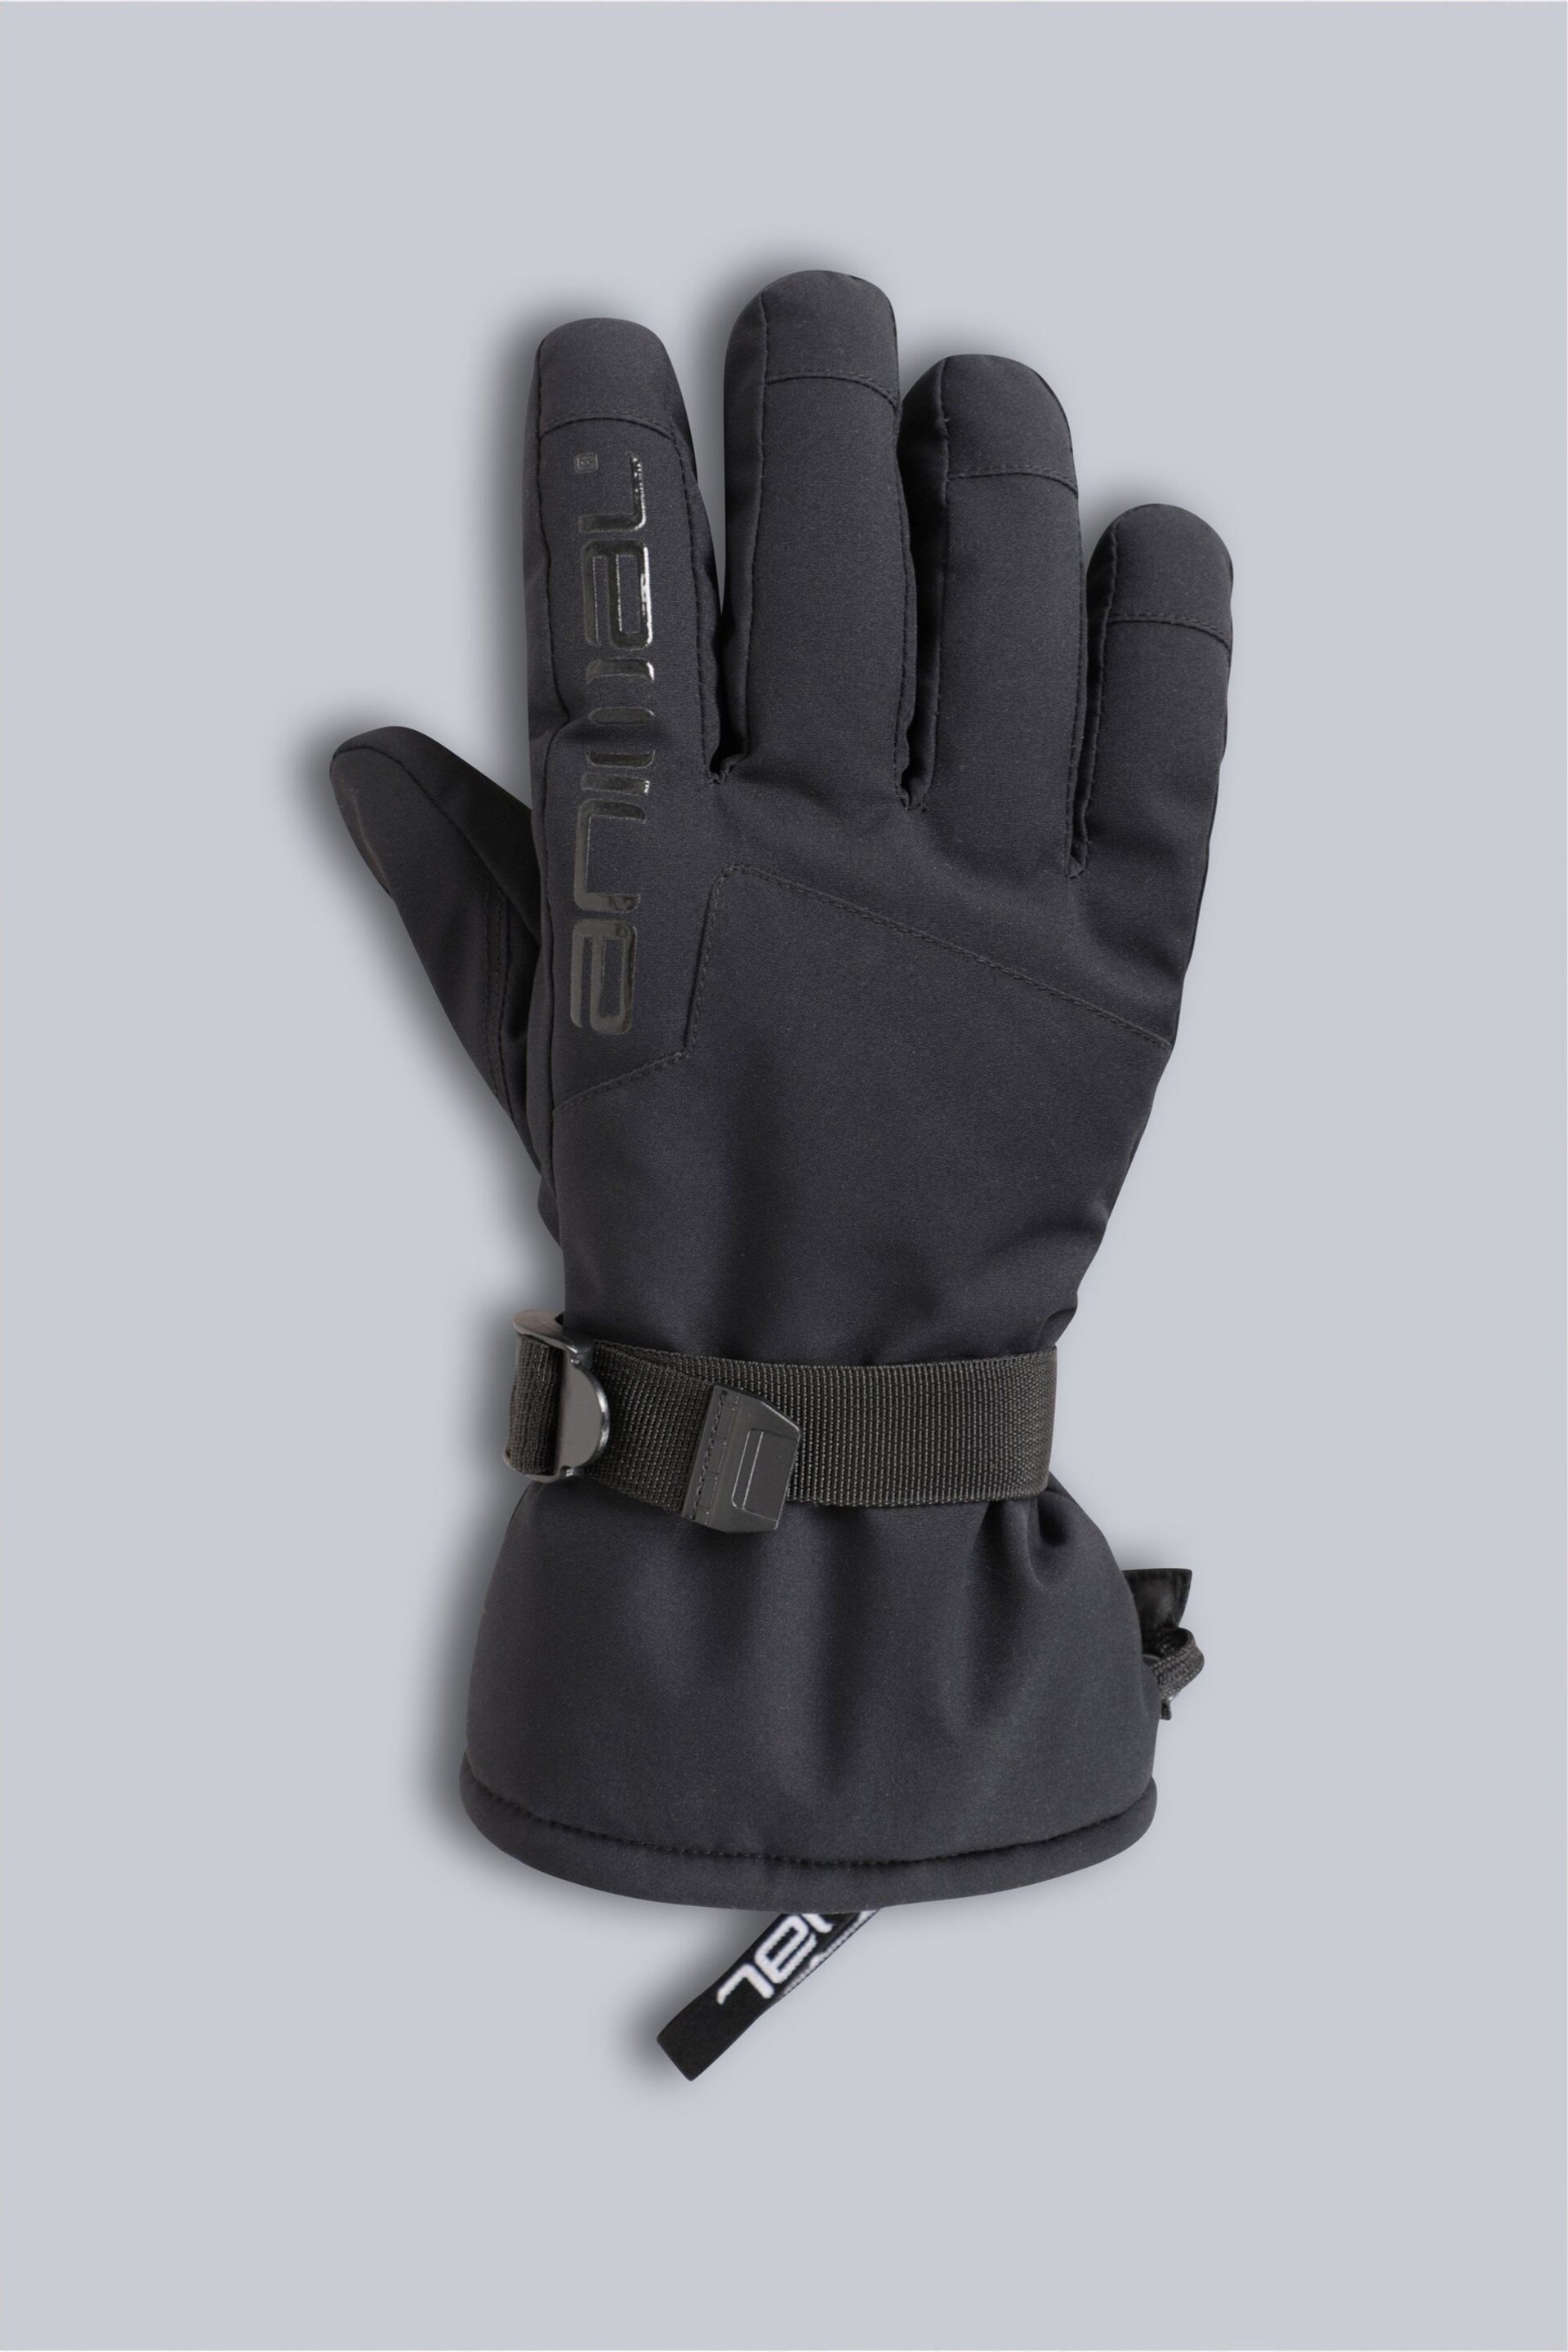 Animal Mens Edge Ski Gloves - Image 3 of 6